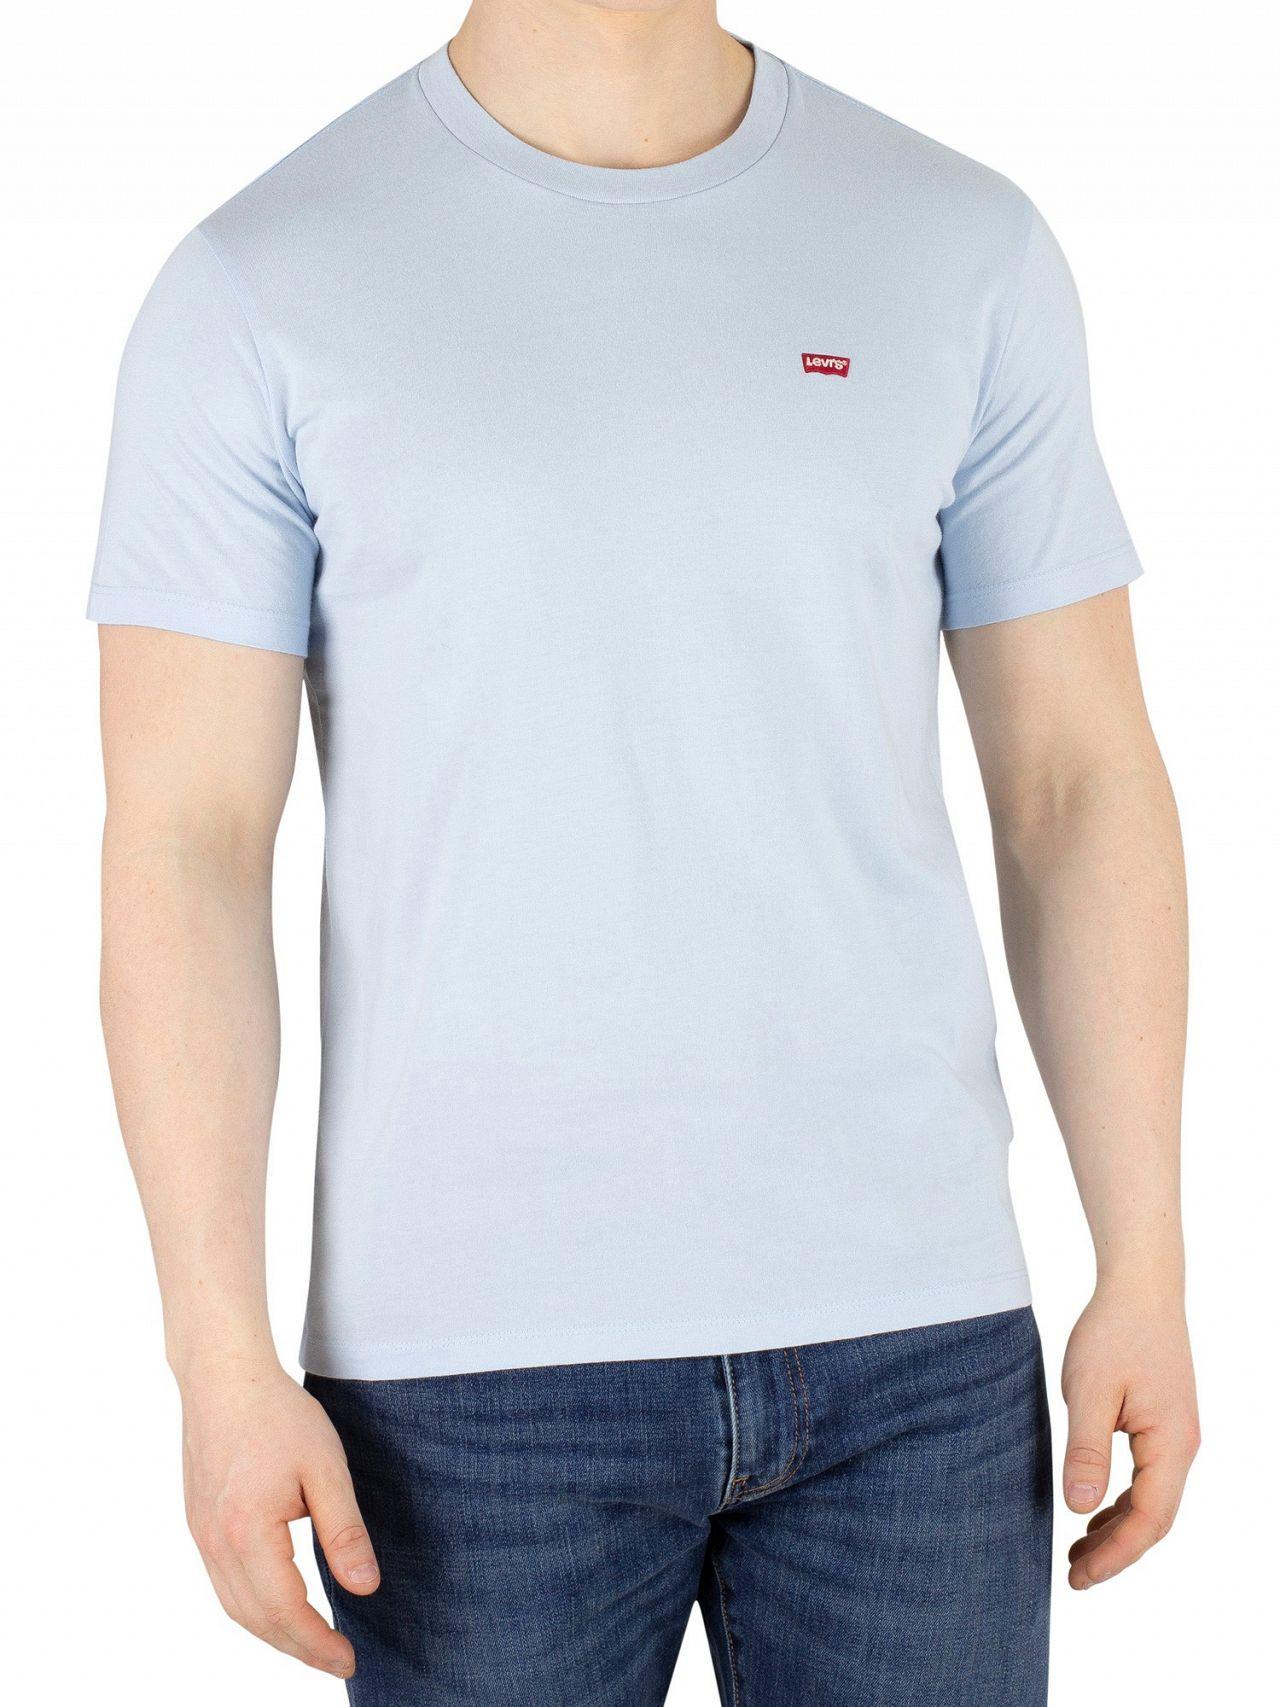 Levi's Skyway Original T-shirt in Blue for Men - Lyst